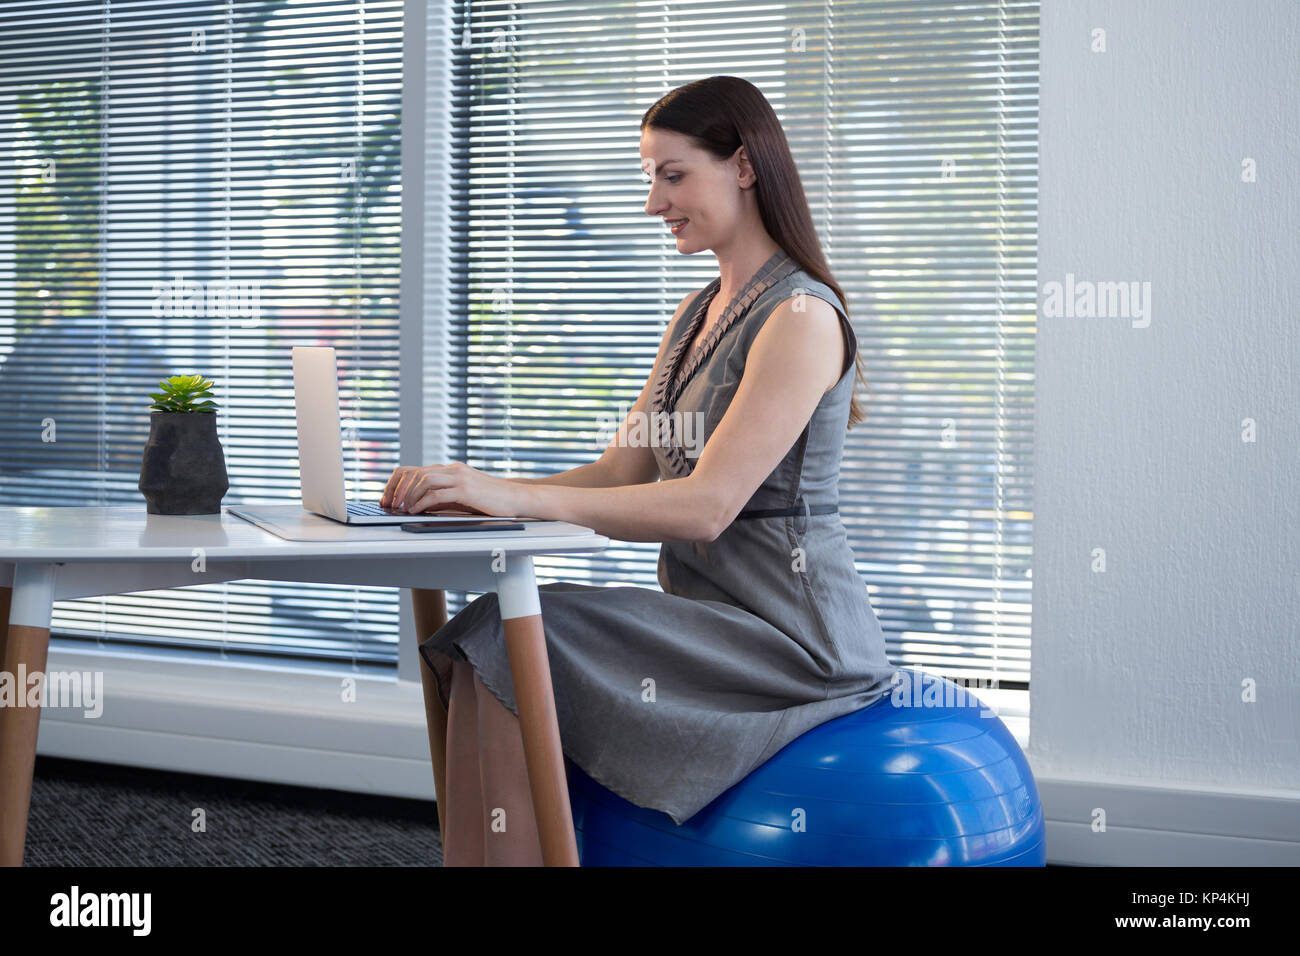 Female Executive Sitting On Exercise Ball While Using Laptop At